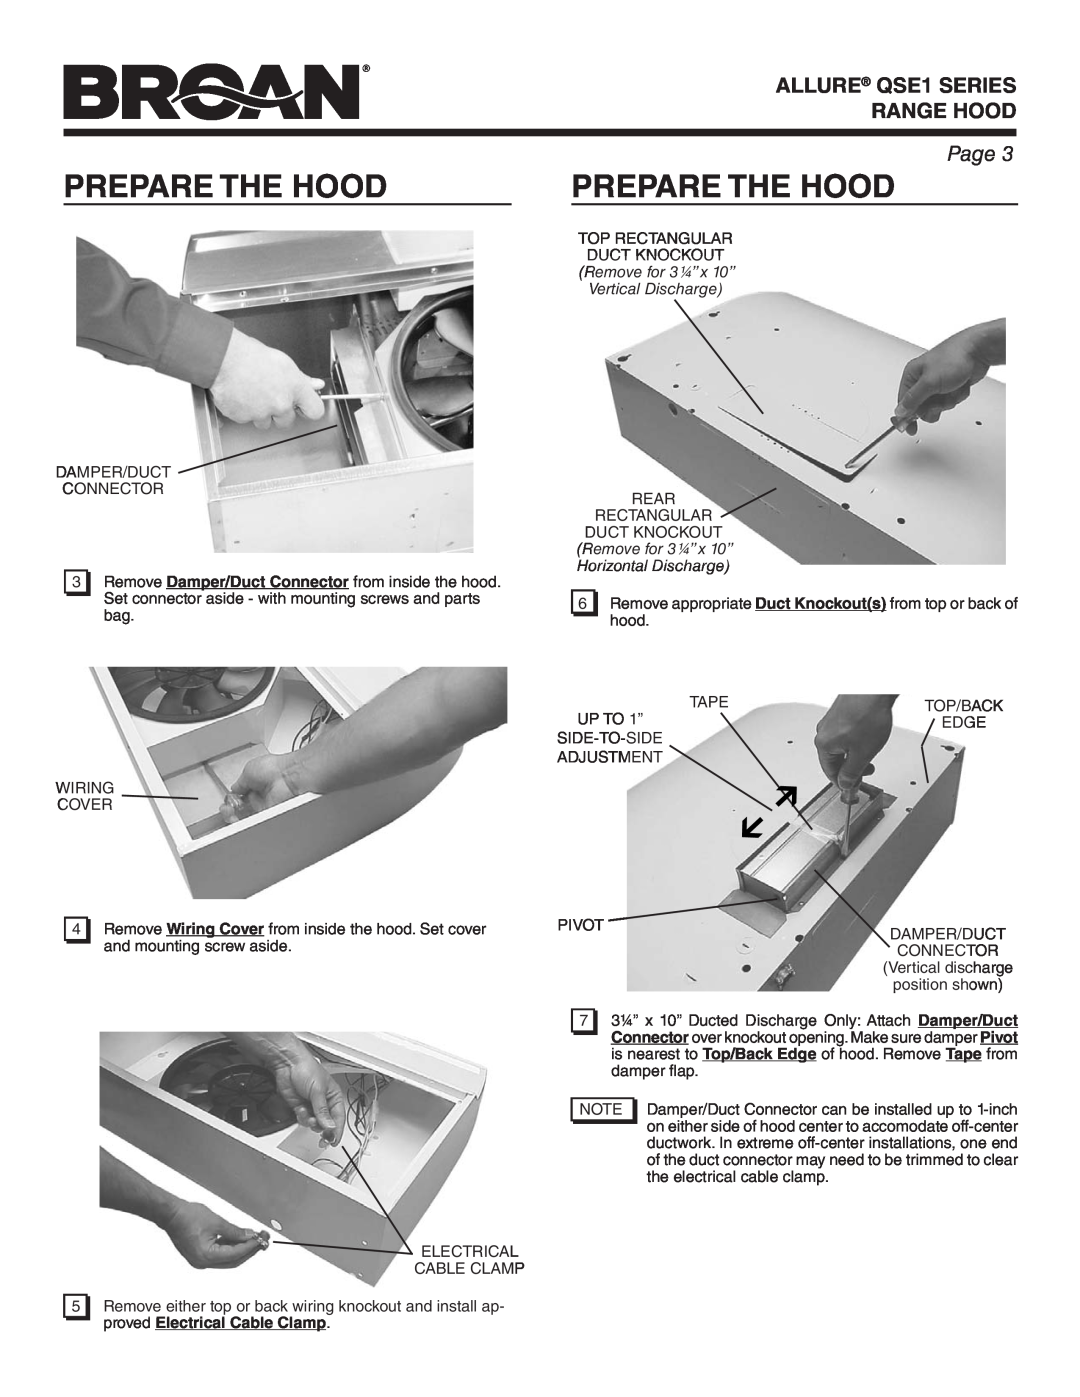 Broan warranty Prepare The Hood, ALLURE QSE1 SERIES RANGE HOOD, Page, Remove for 3¼” x 10” Vertical Discharge 